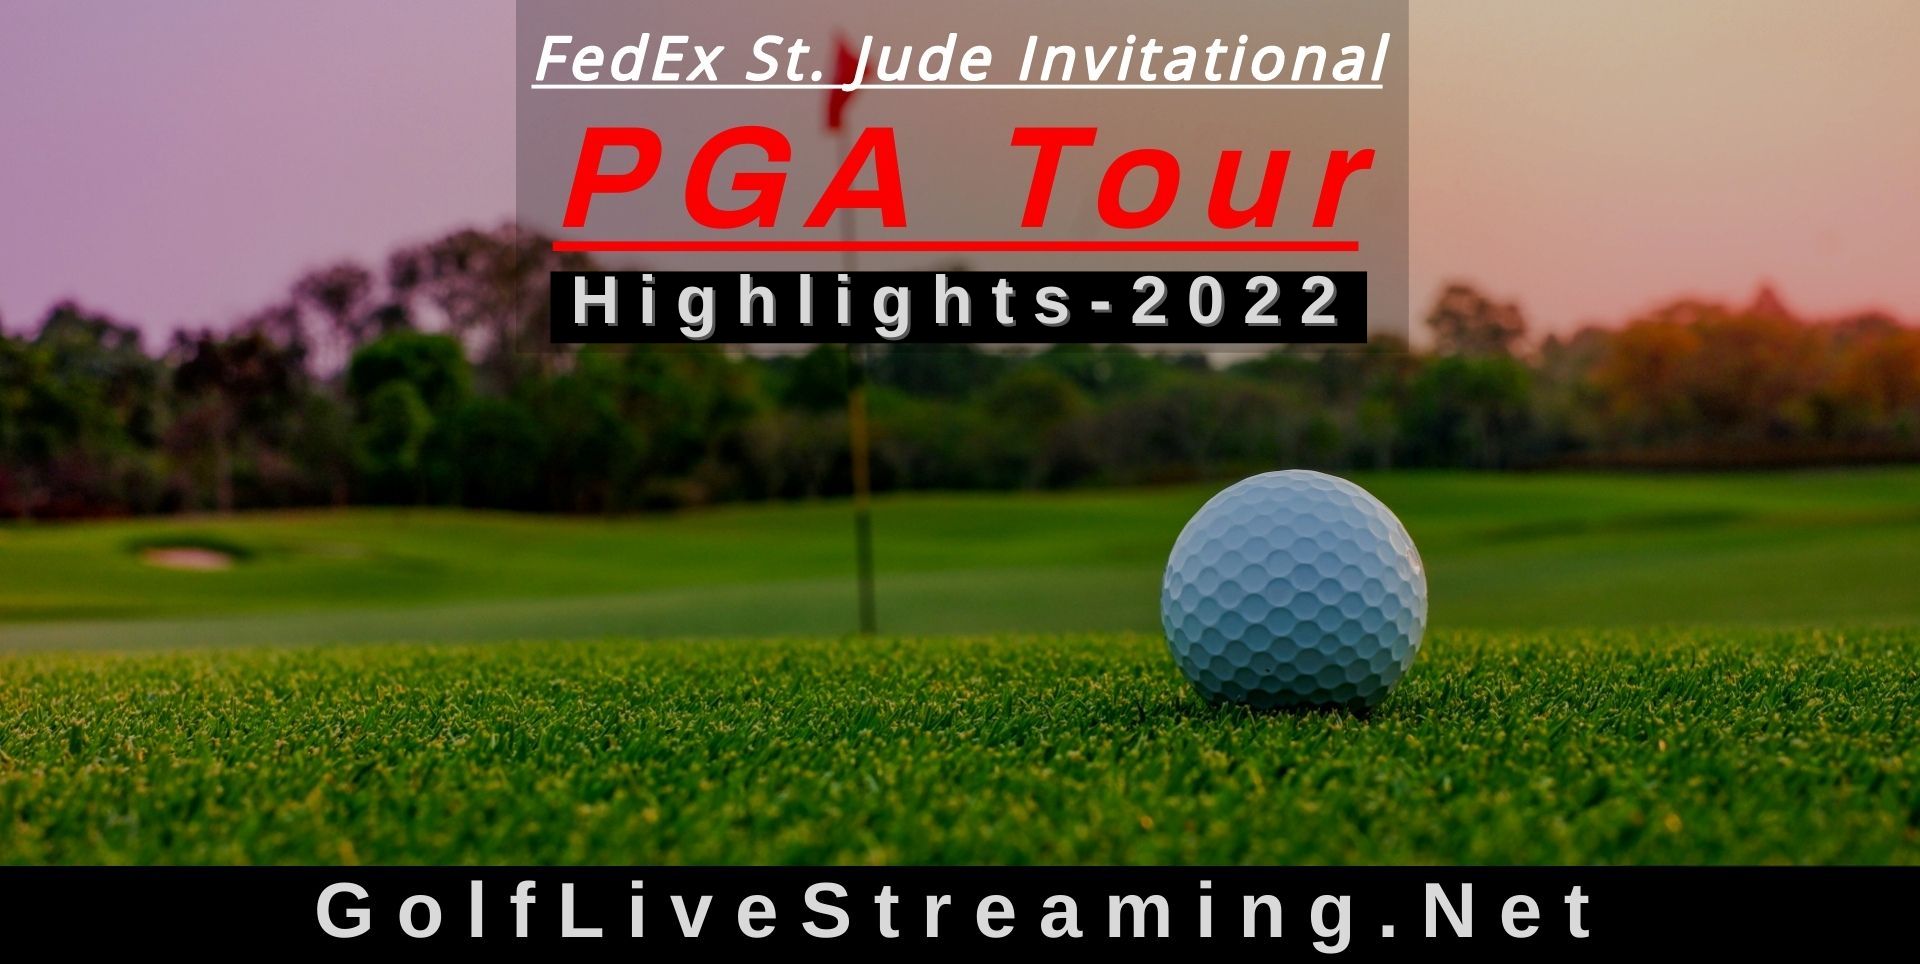 FedEx St Jude Invitational Round 1 Highlights 2022 PGA